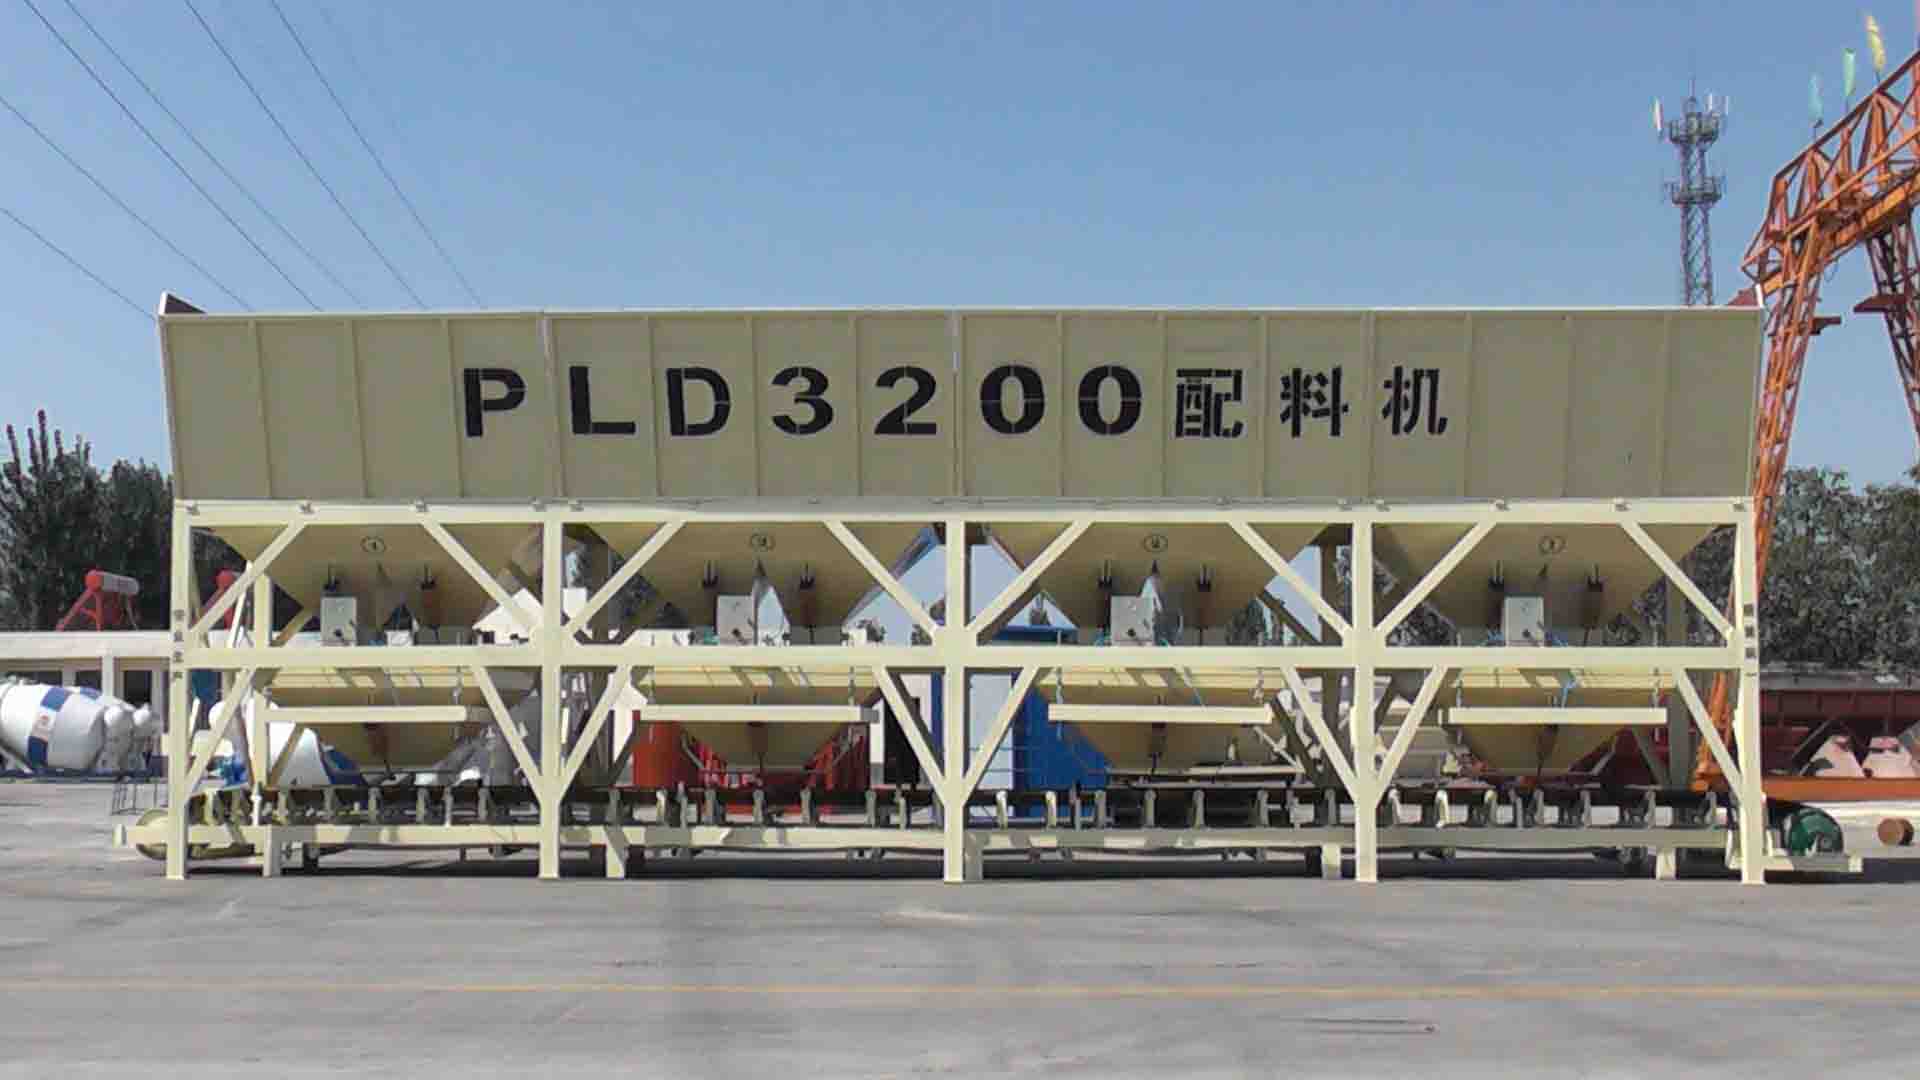 PLD 3200 Batching machine